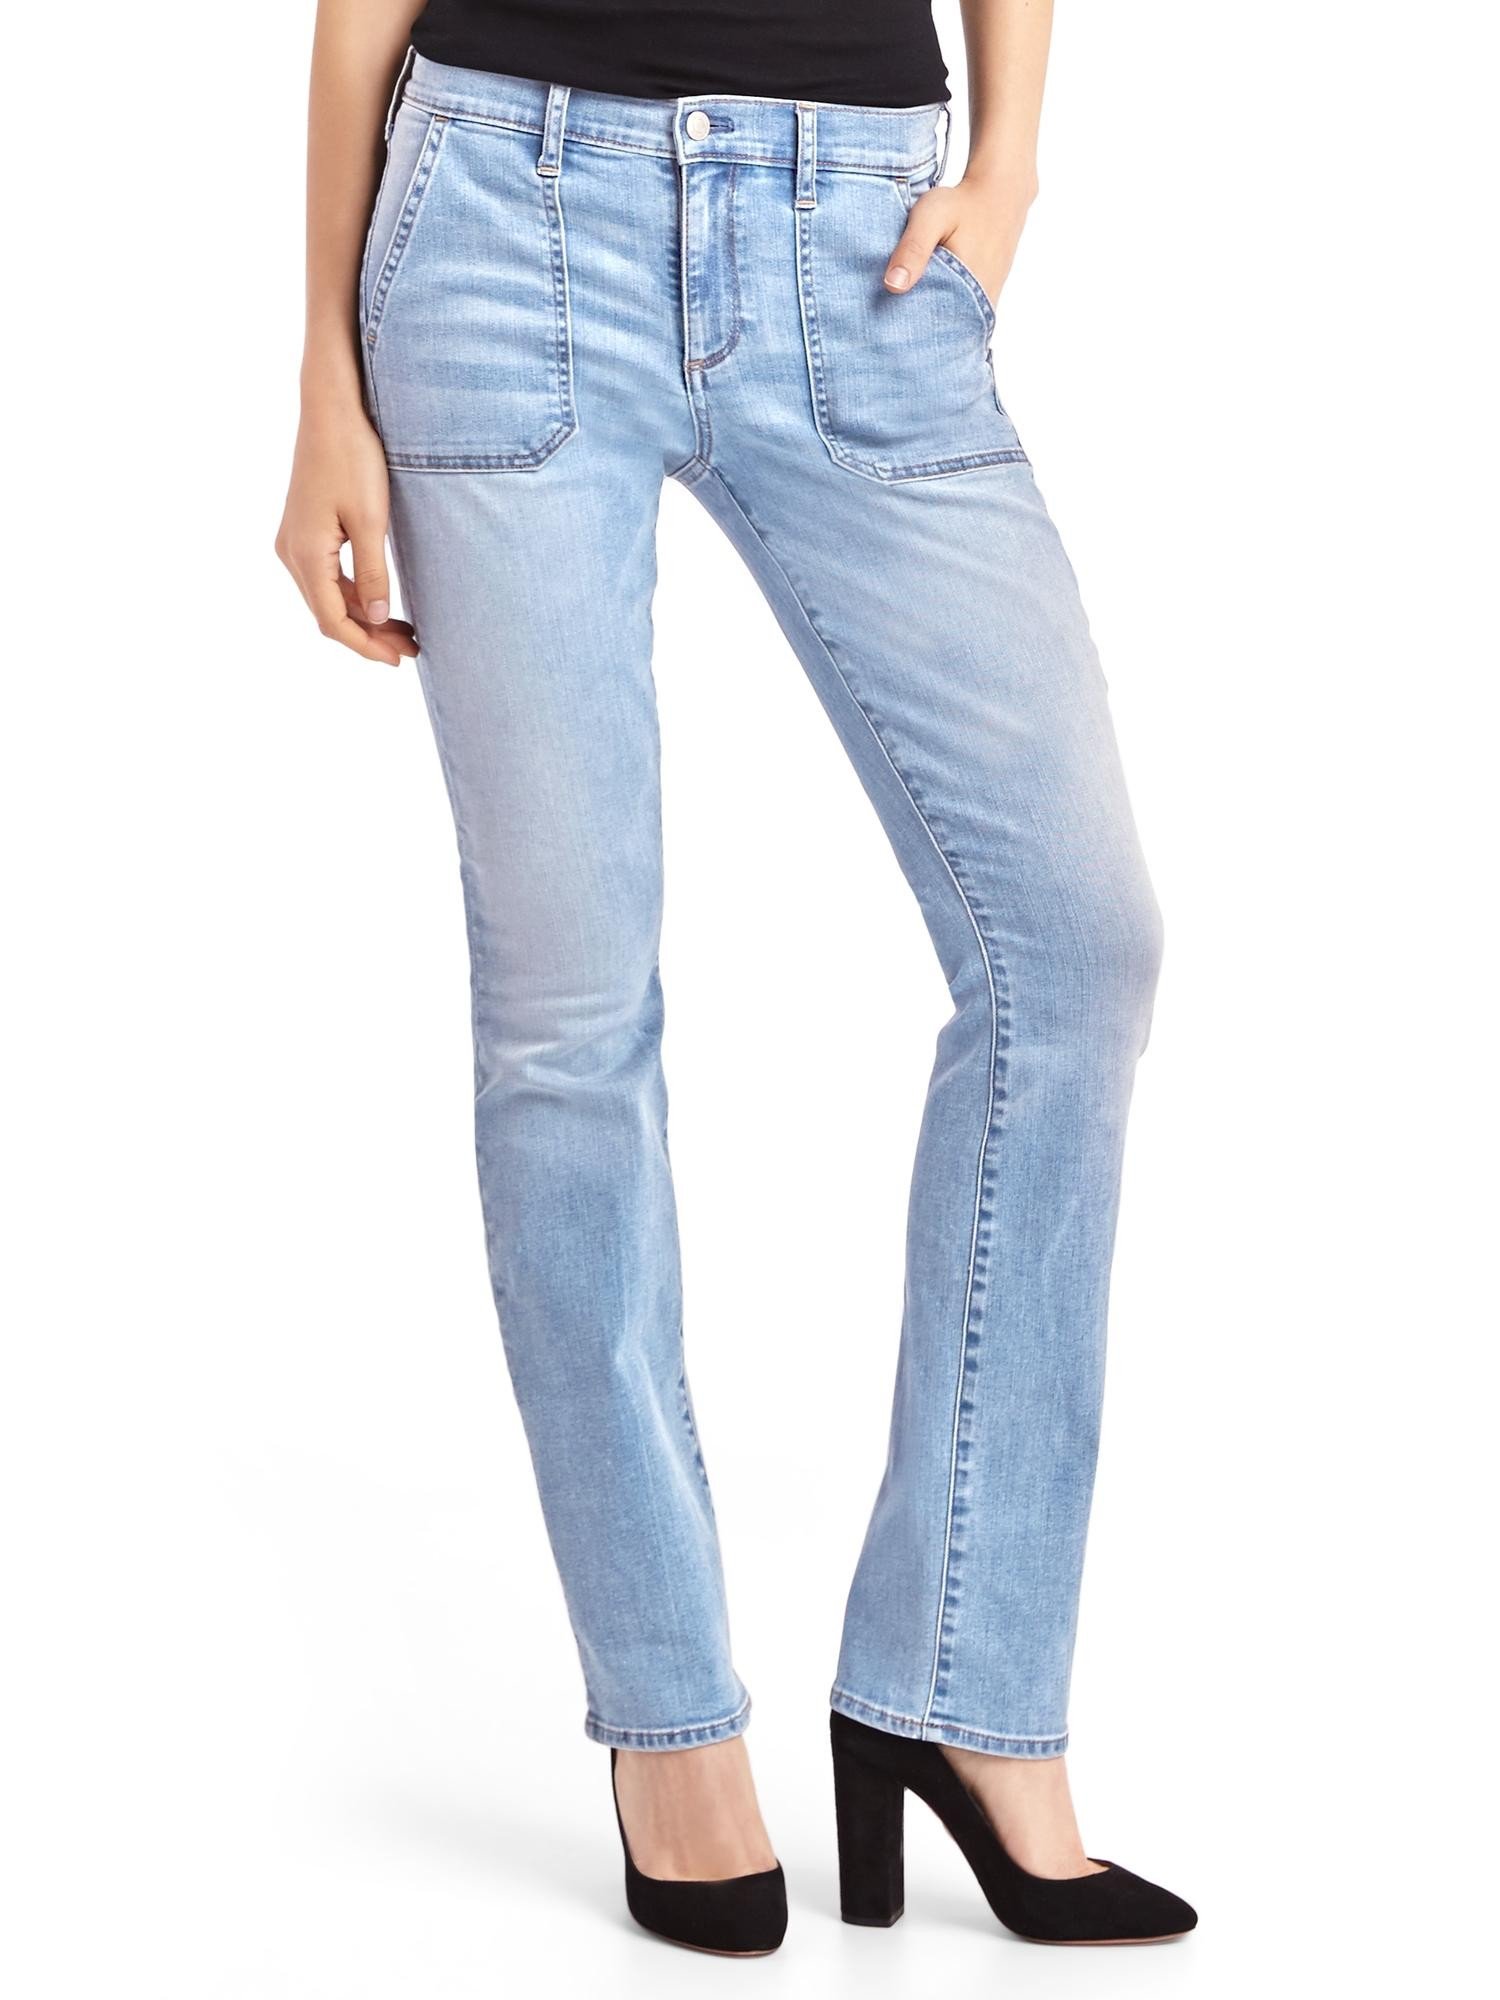 Orta belli jean pantolon product image